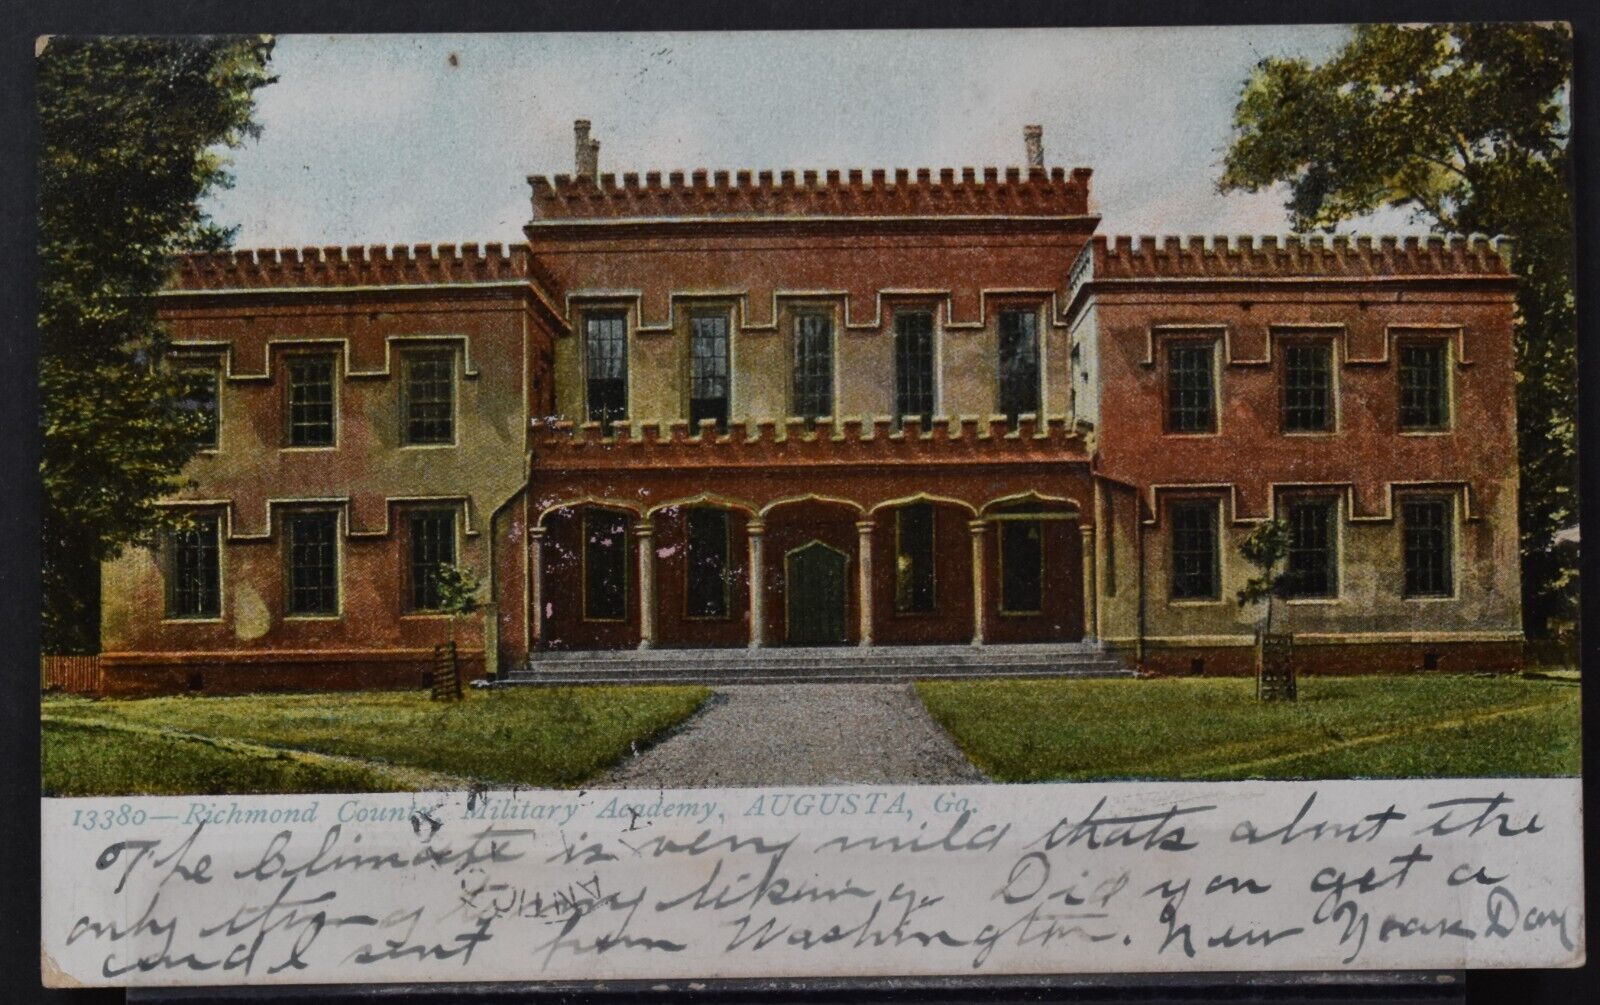 Augusta, GA - Richmond County Military Academy - 1909